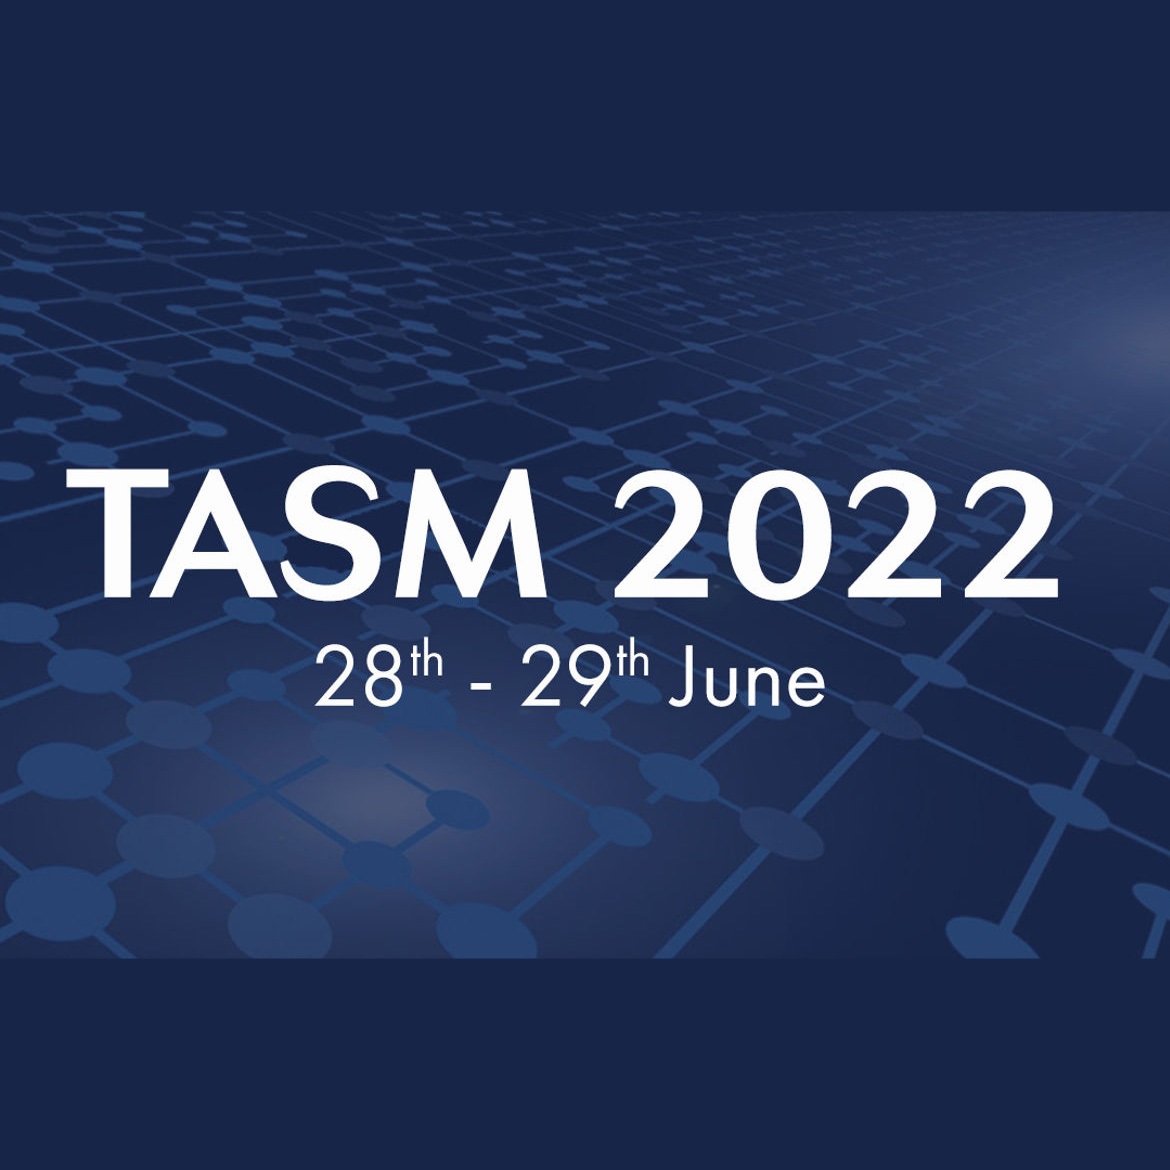 Terrorism and Social Media (TASM) conference in 2022